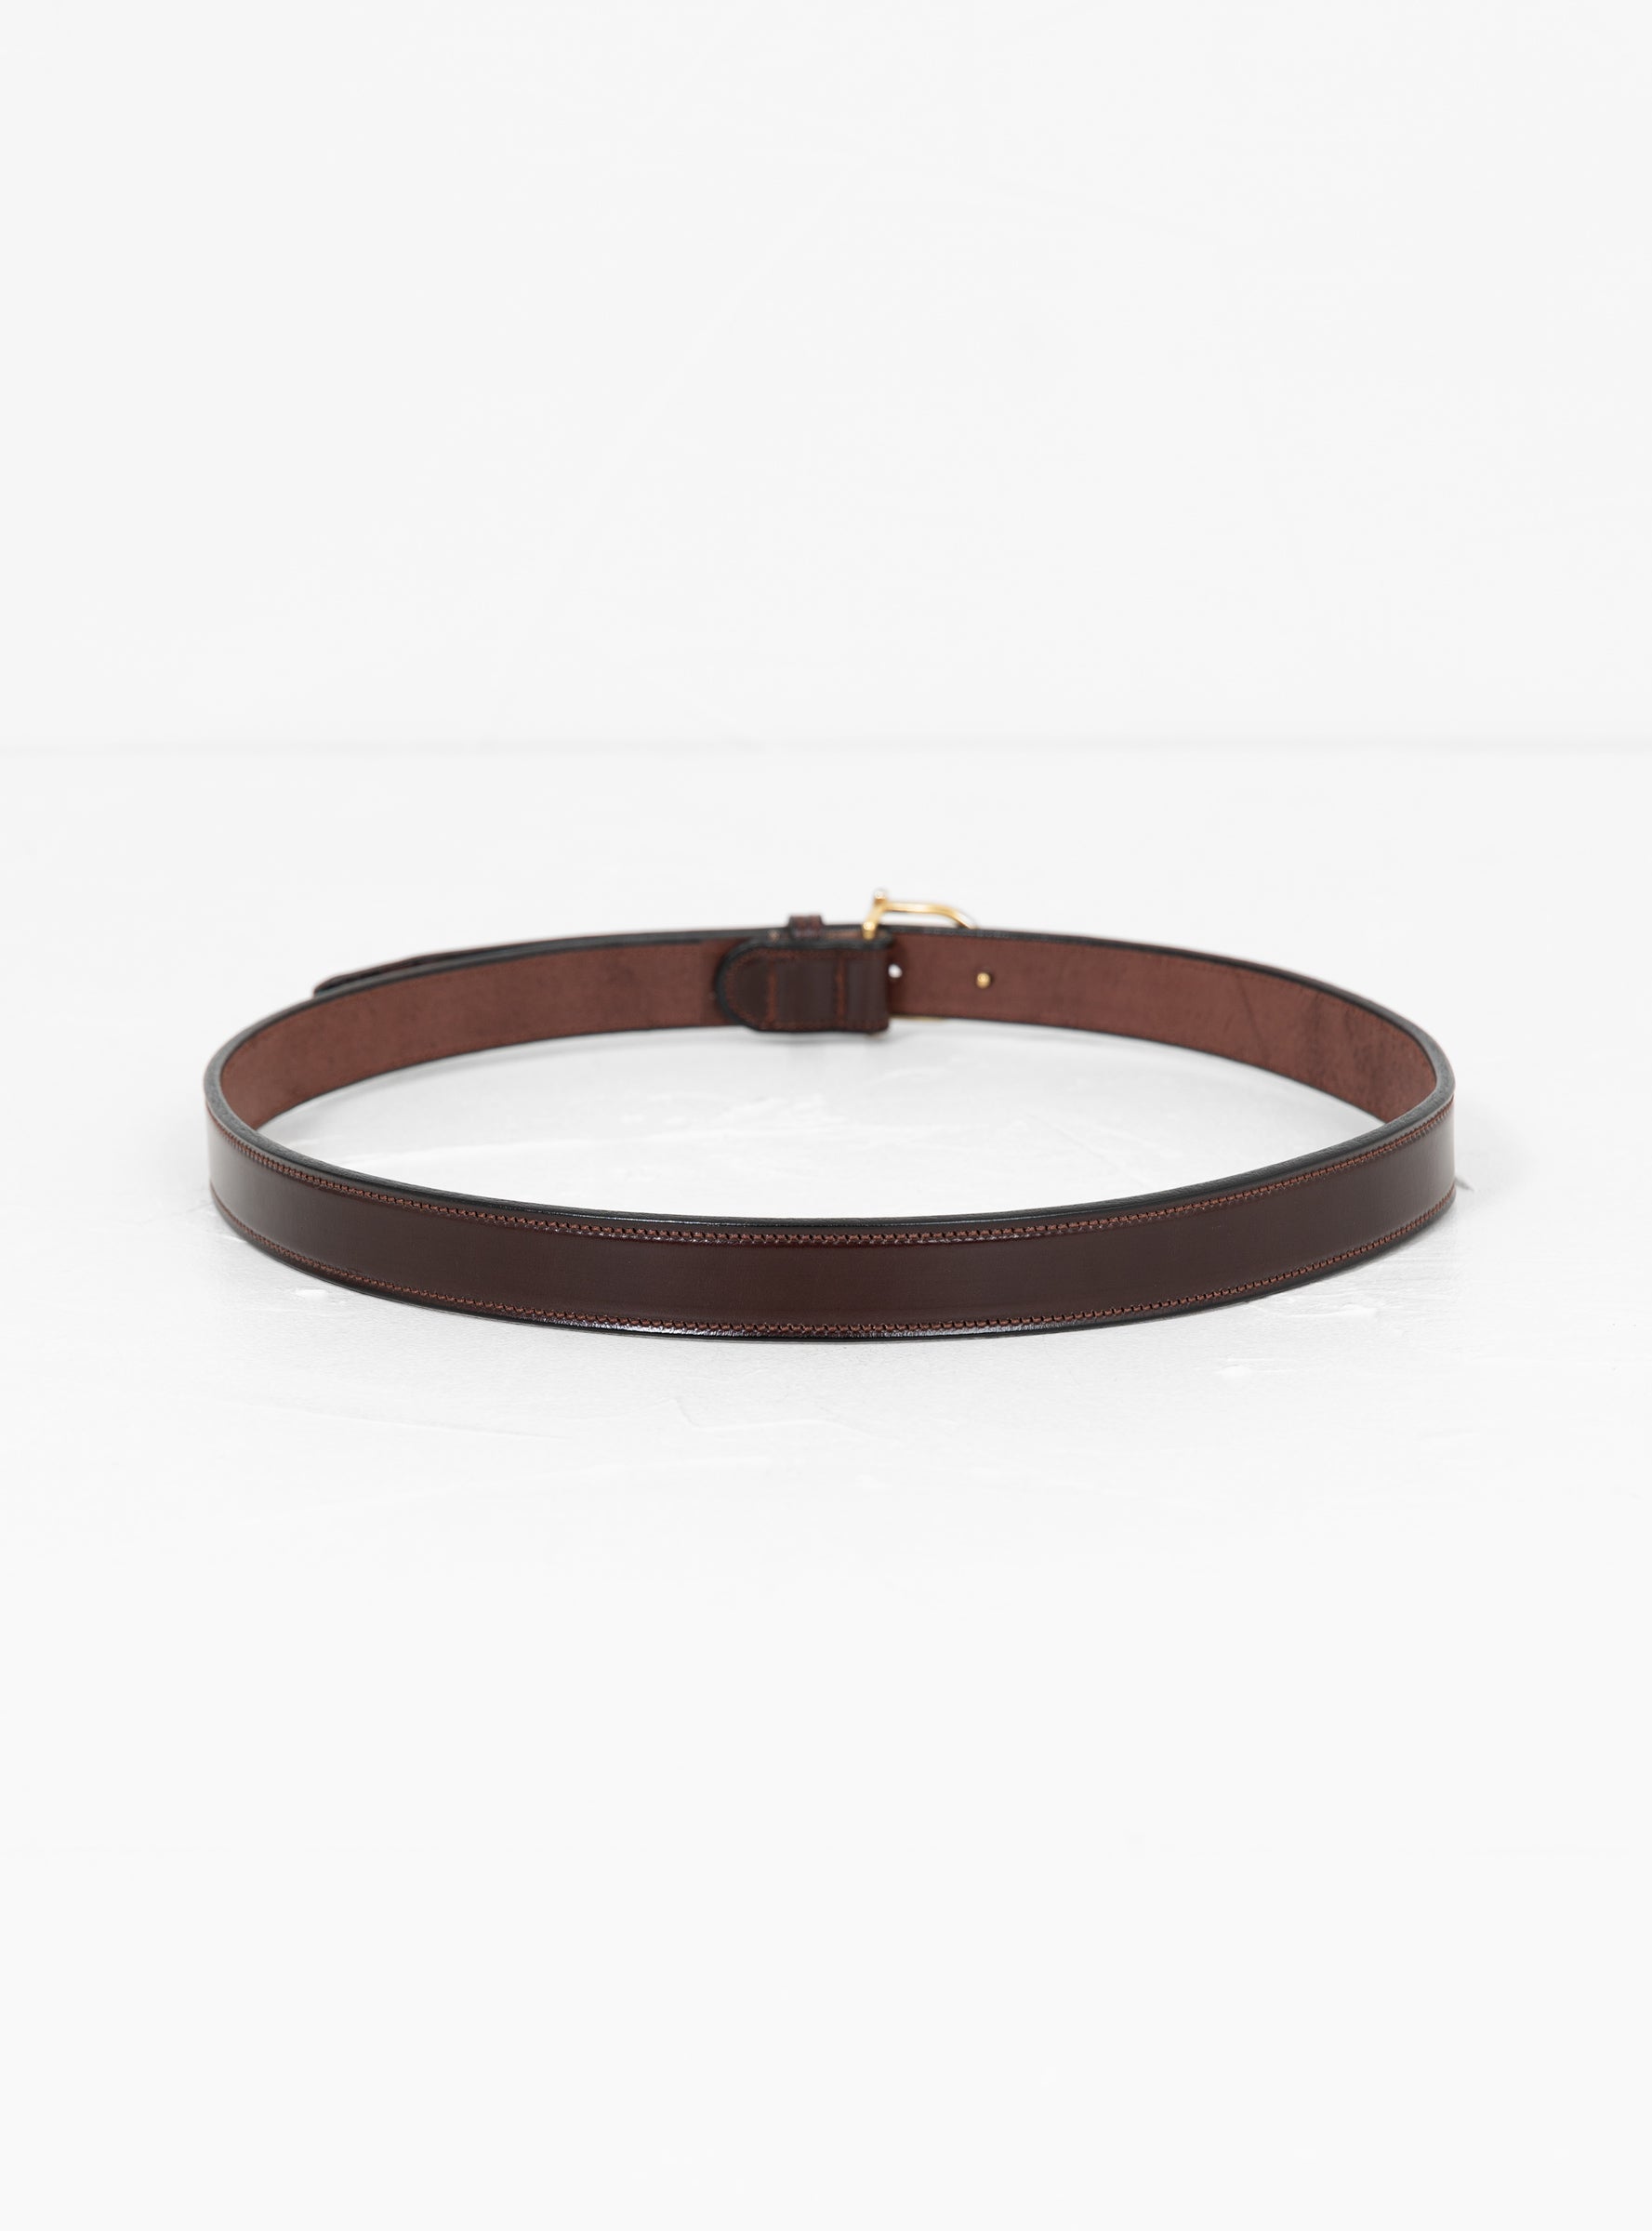  Tory Leather Spur Belt Havana & Brass - Large